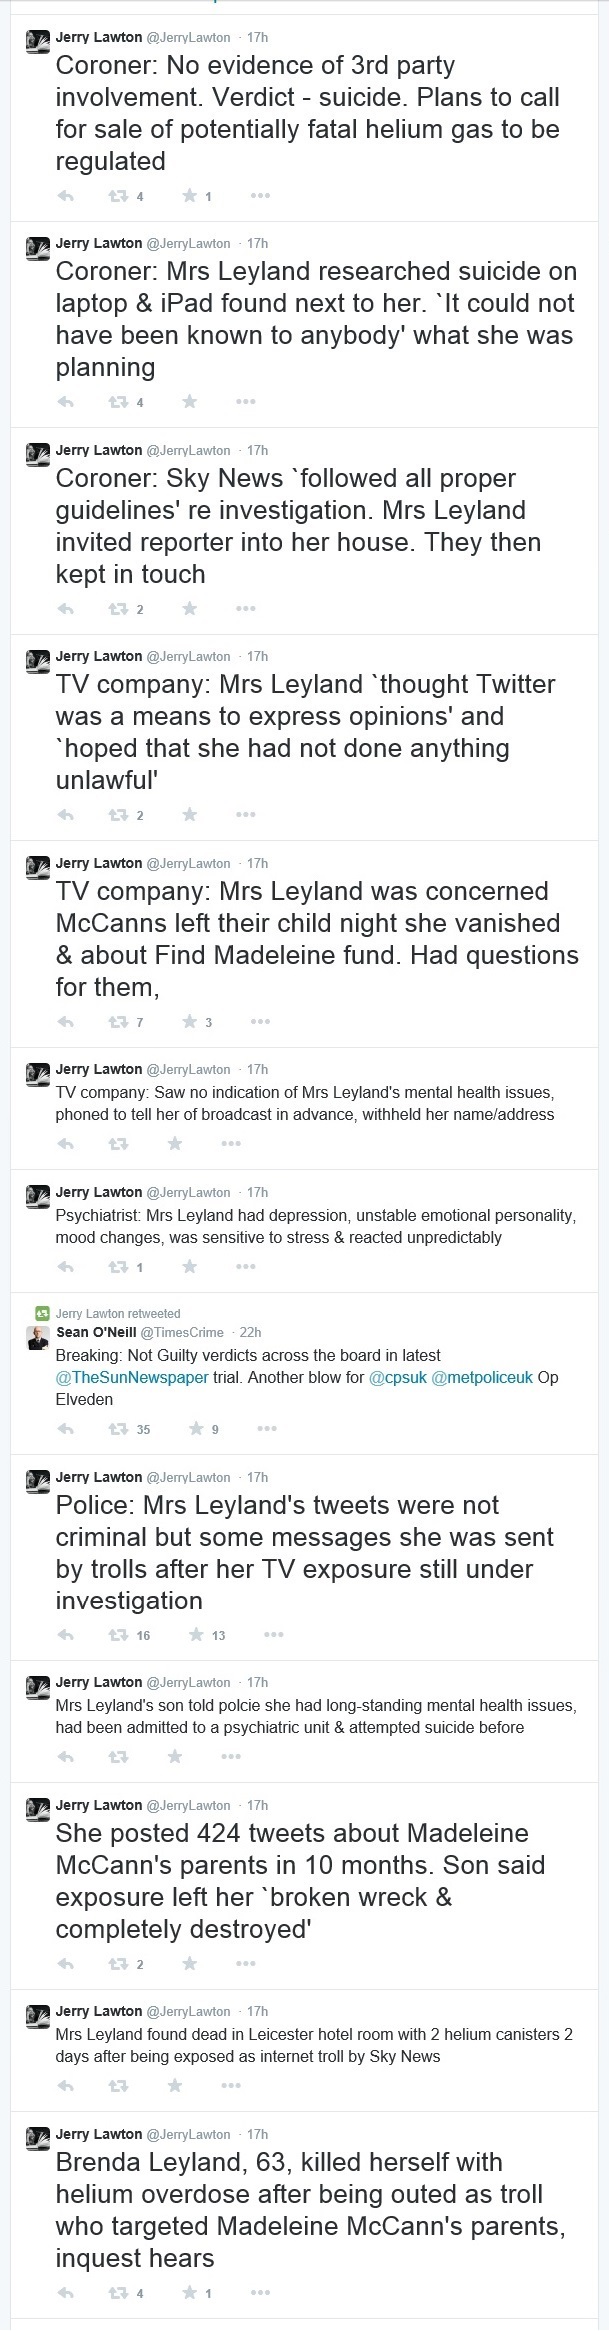 Jerry Lawton tweets, 20 March 2015